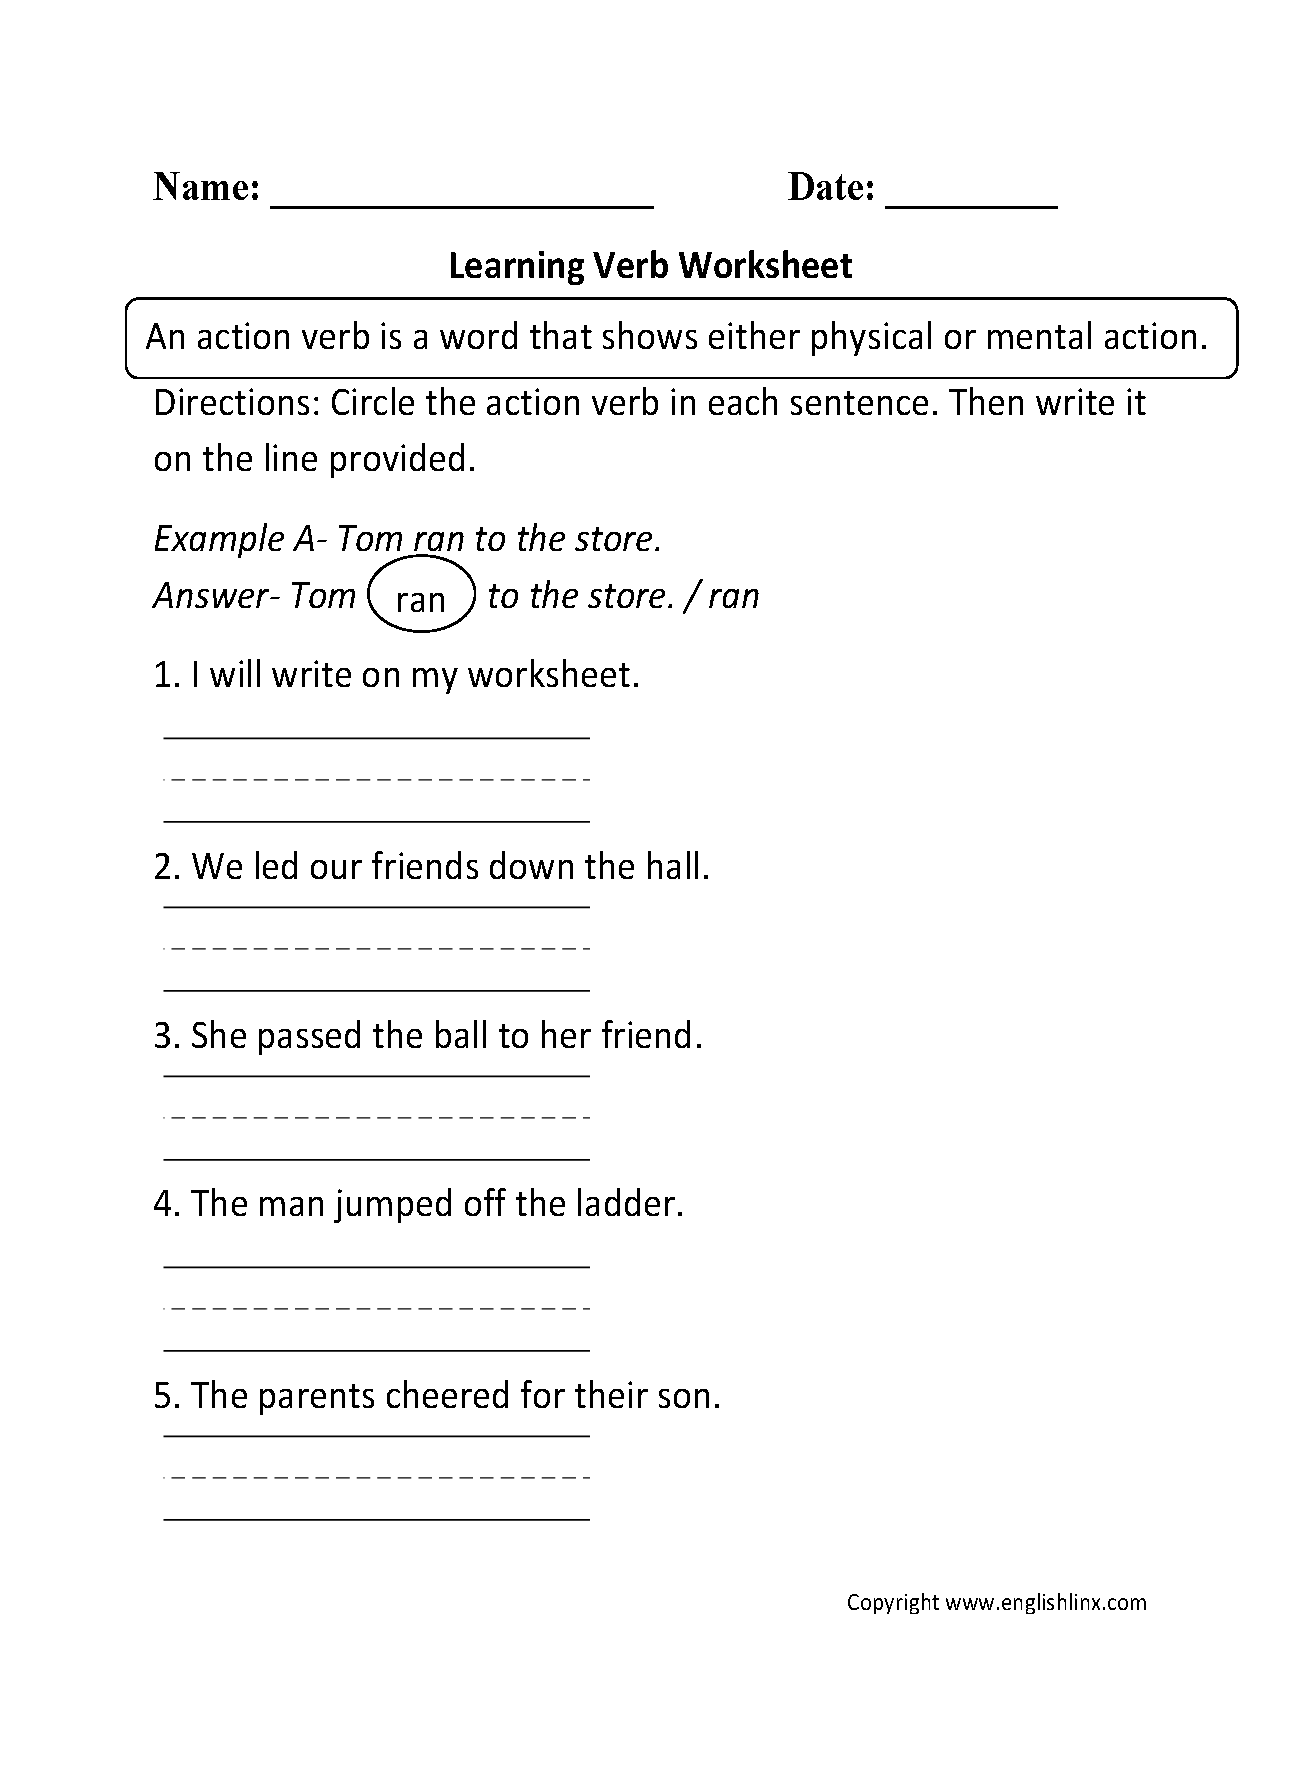 Learning Verb Worksheet